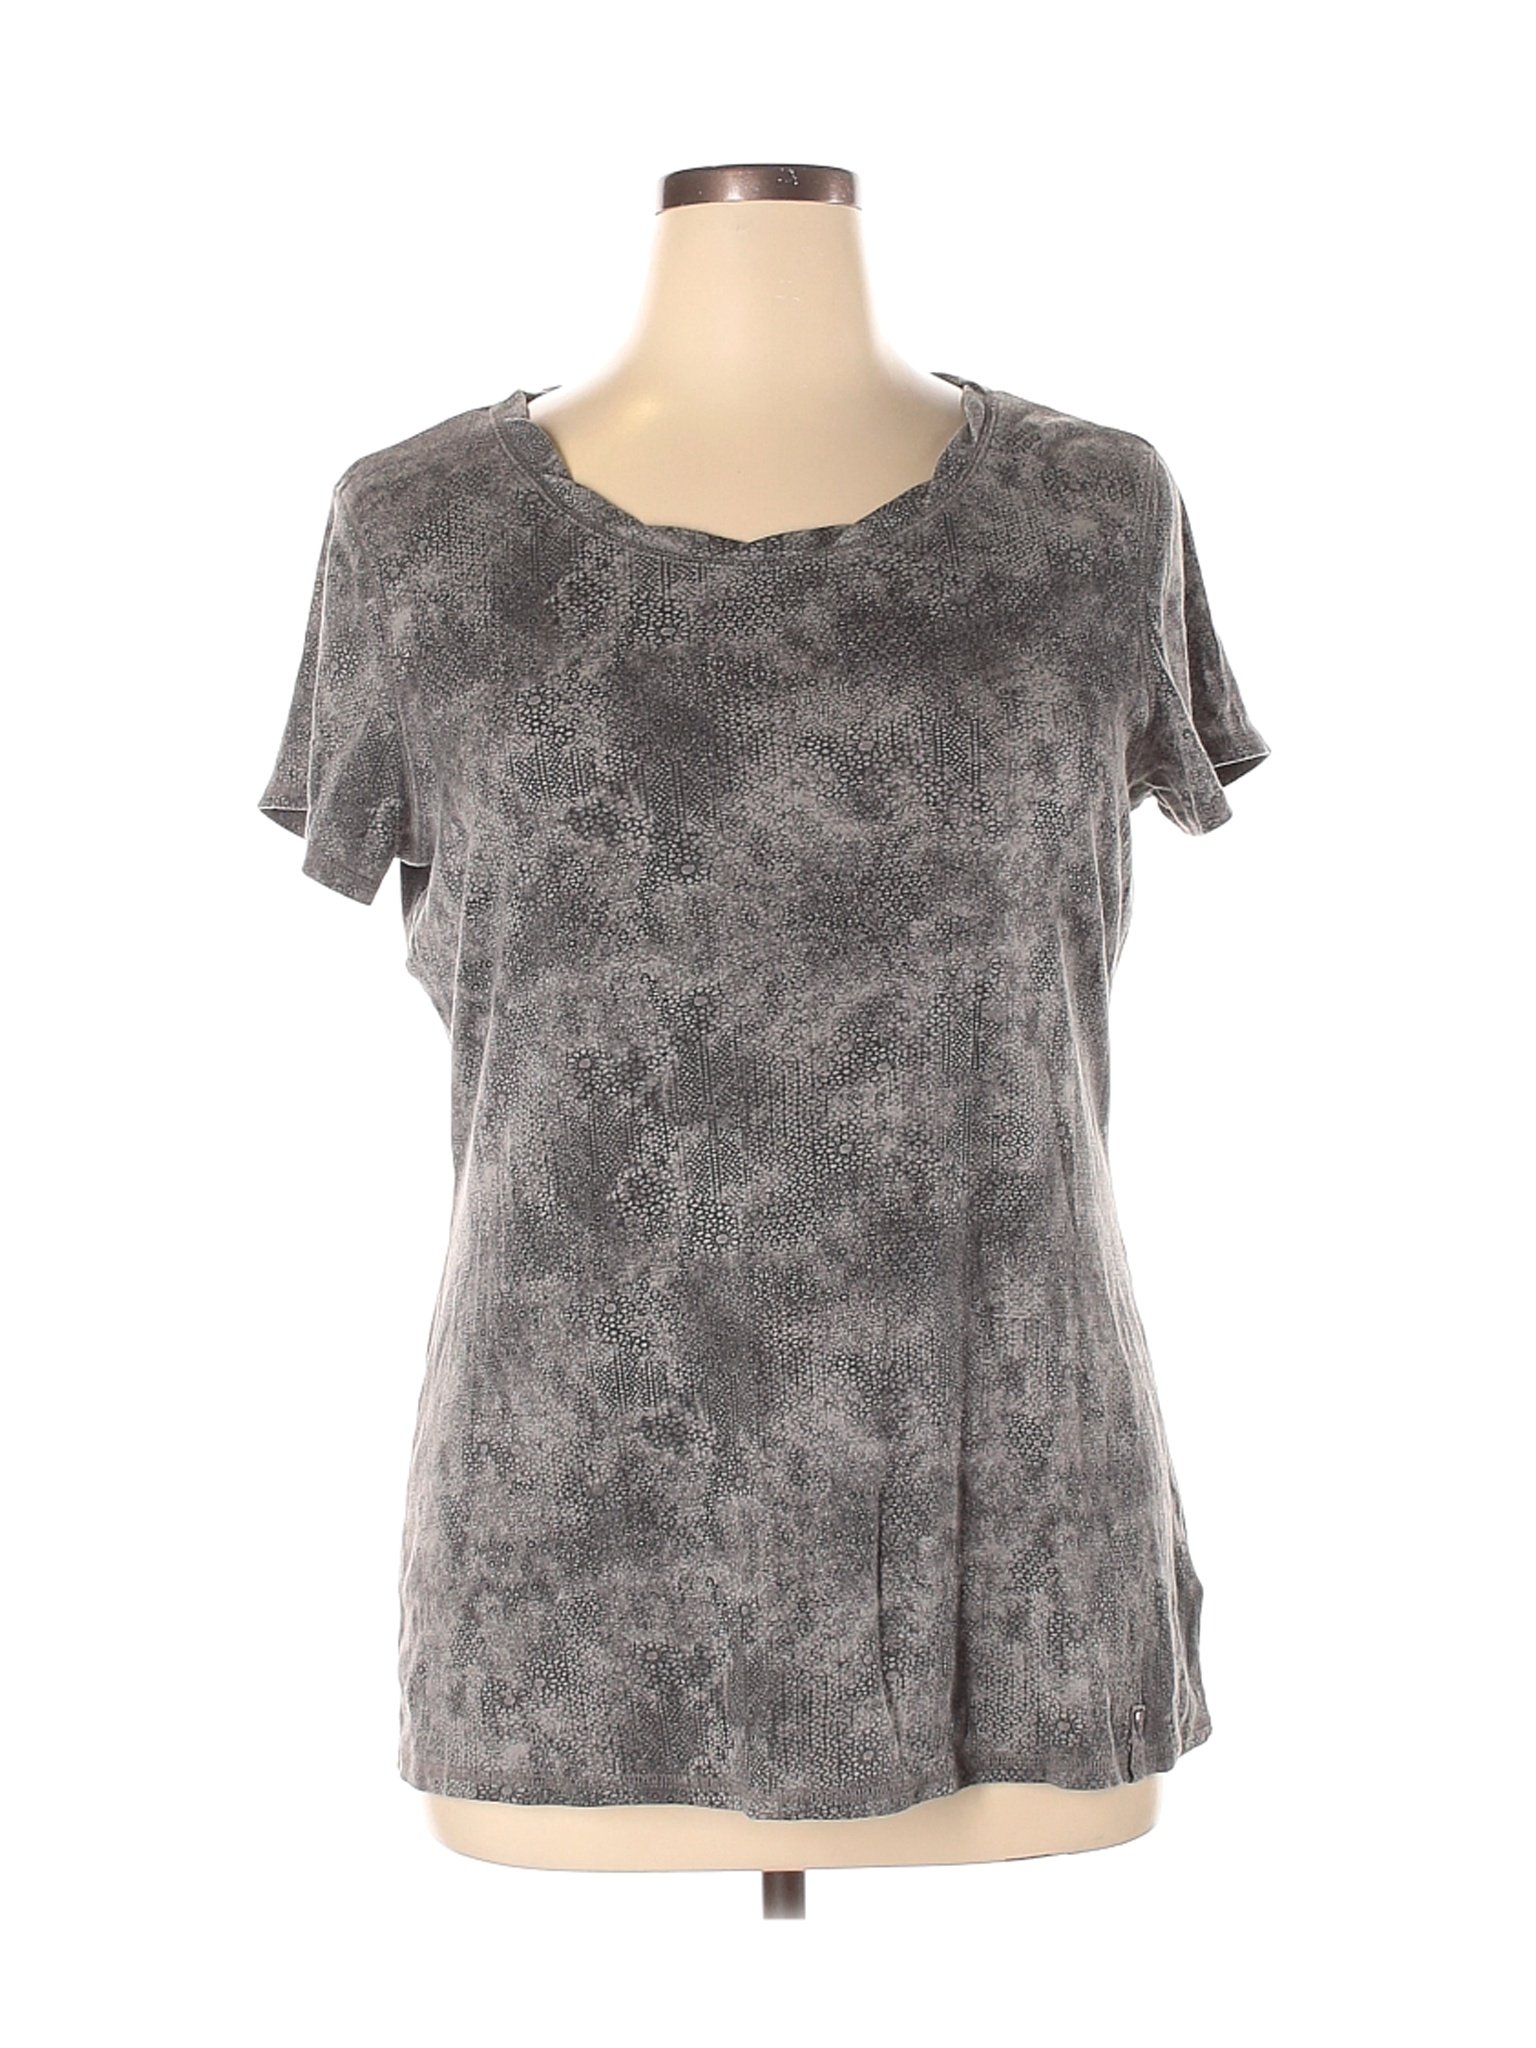 Ruff Hewn Women Gray Short Sleeve Top XL | eBay